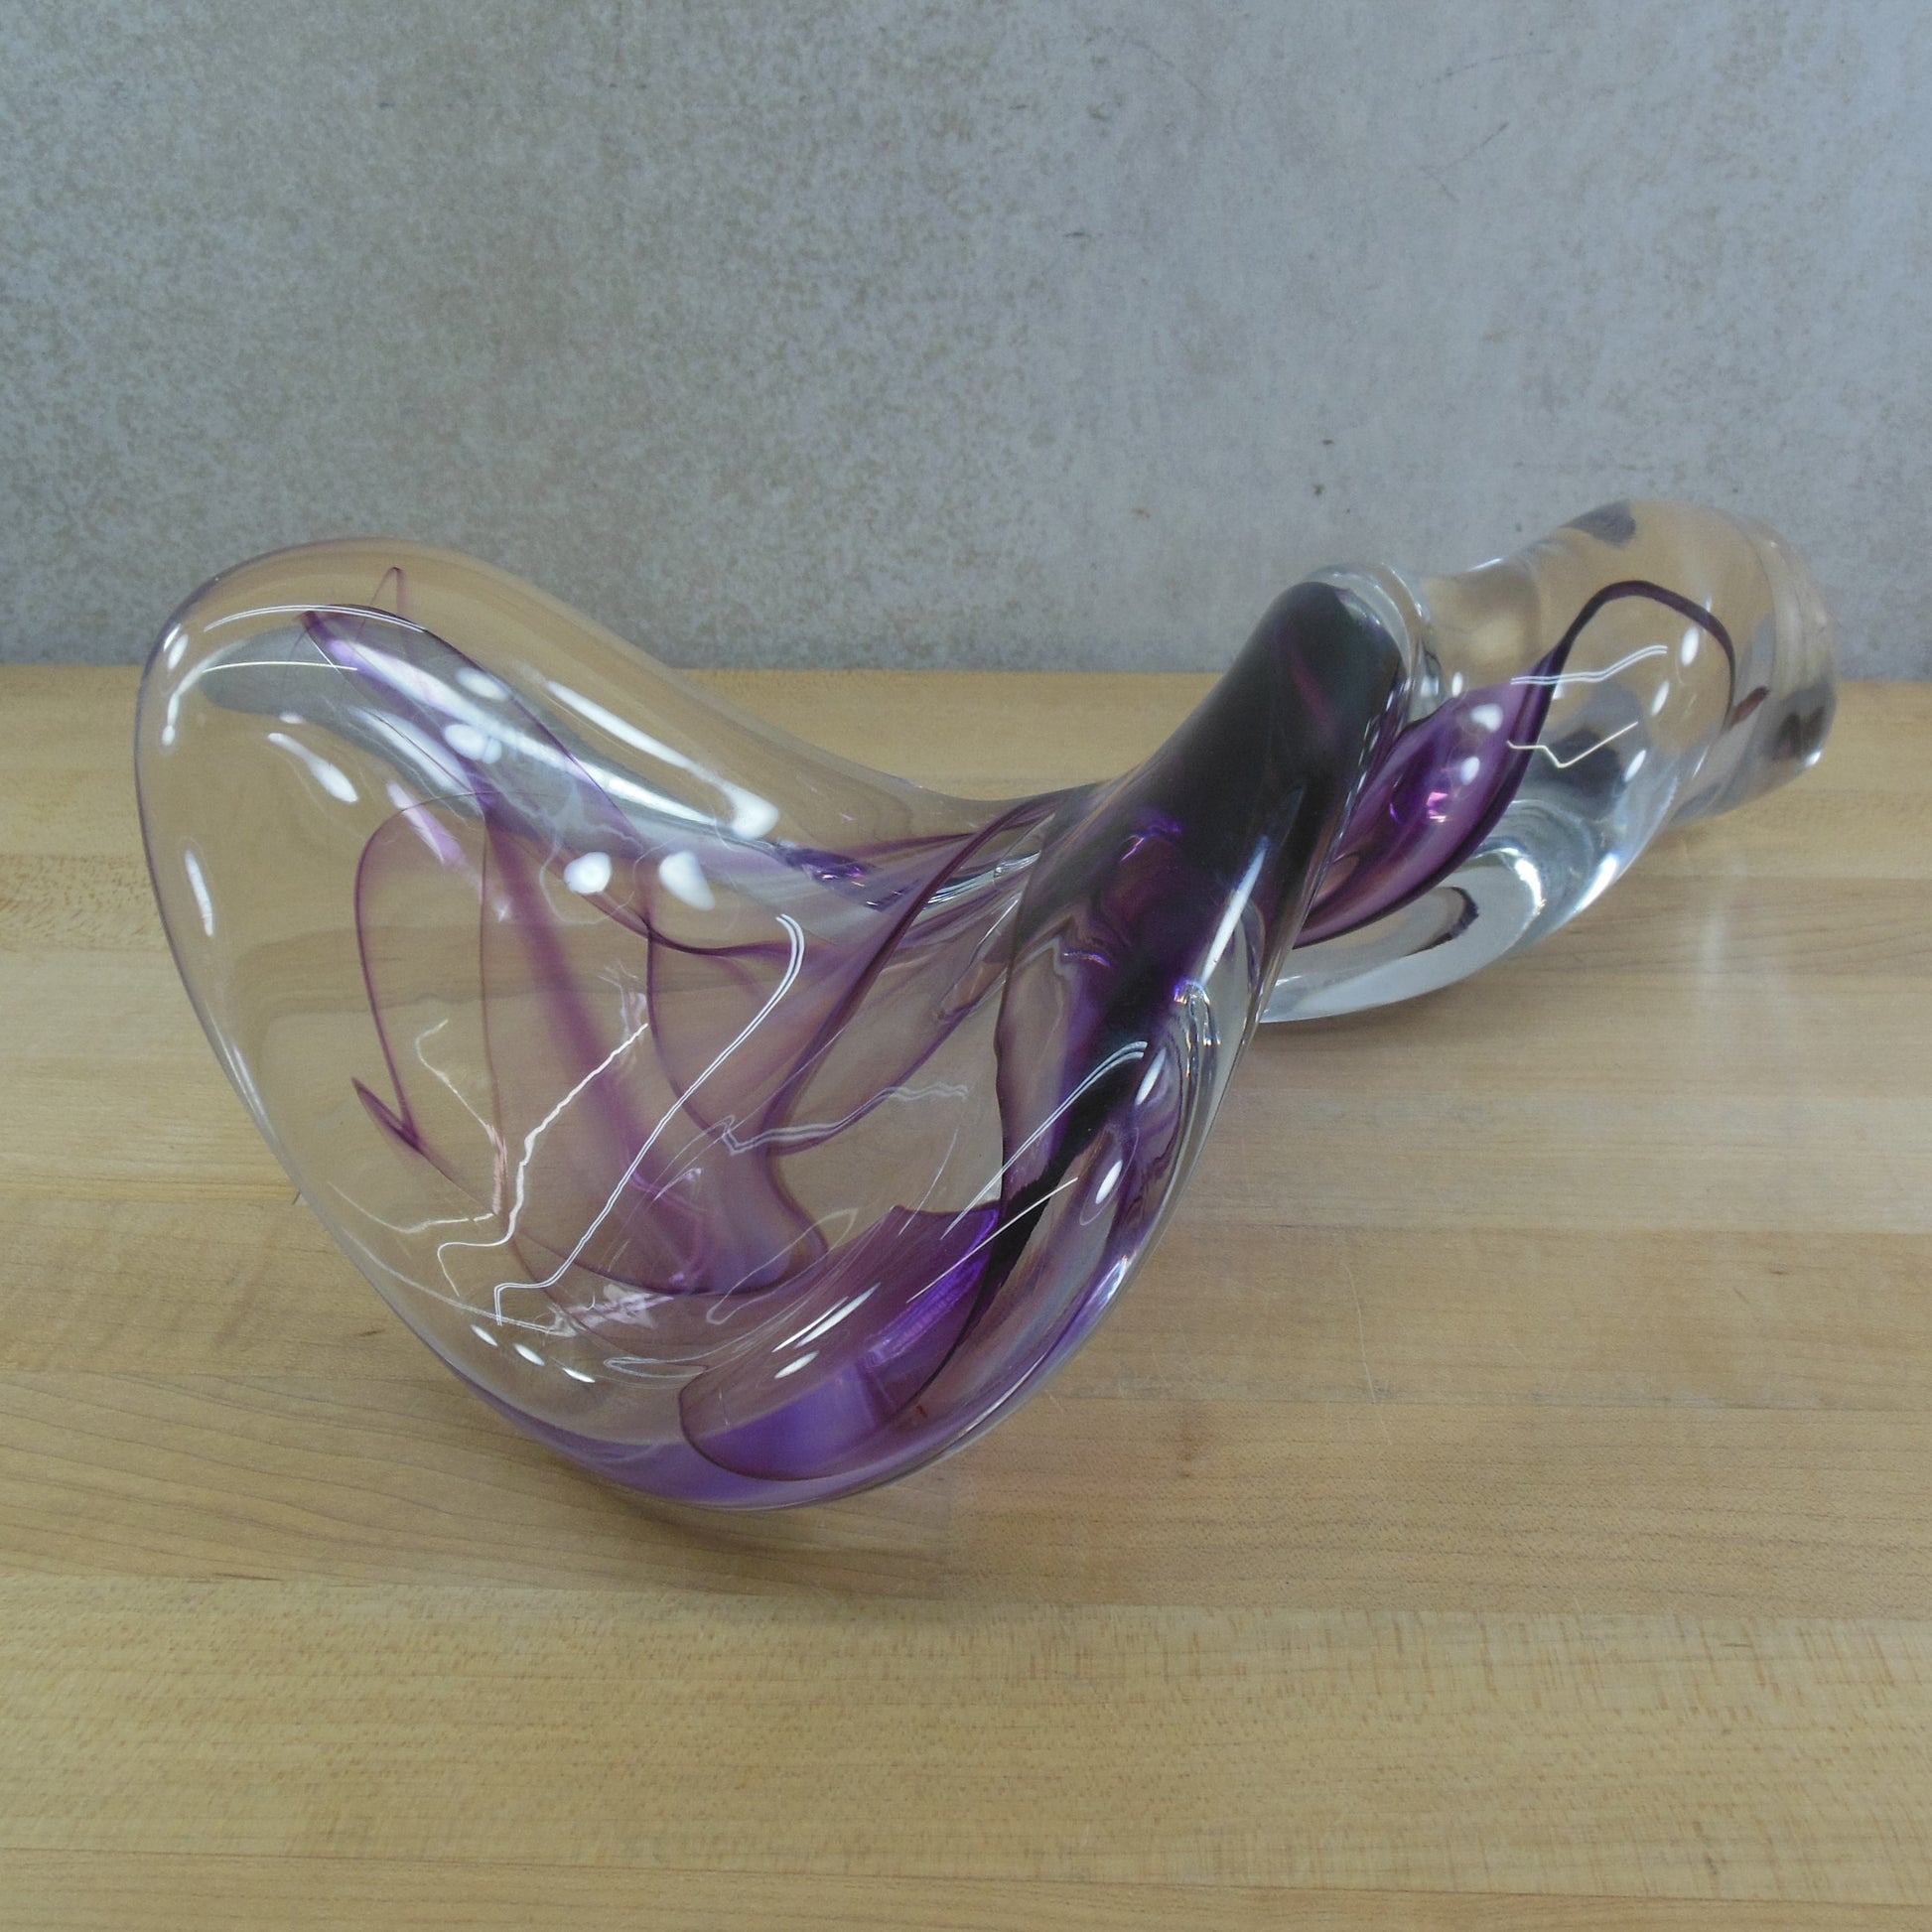 David Goldhagen Signed 1991 Art Glass Twist Sculpture Purple Clear 13" Organic Free Form